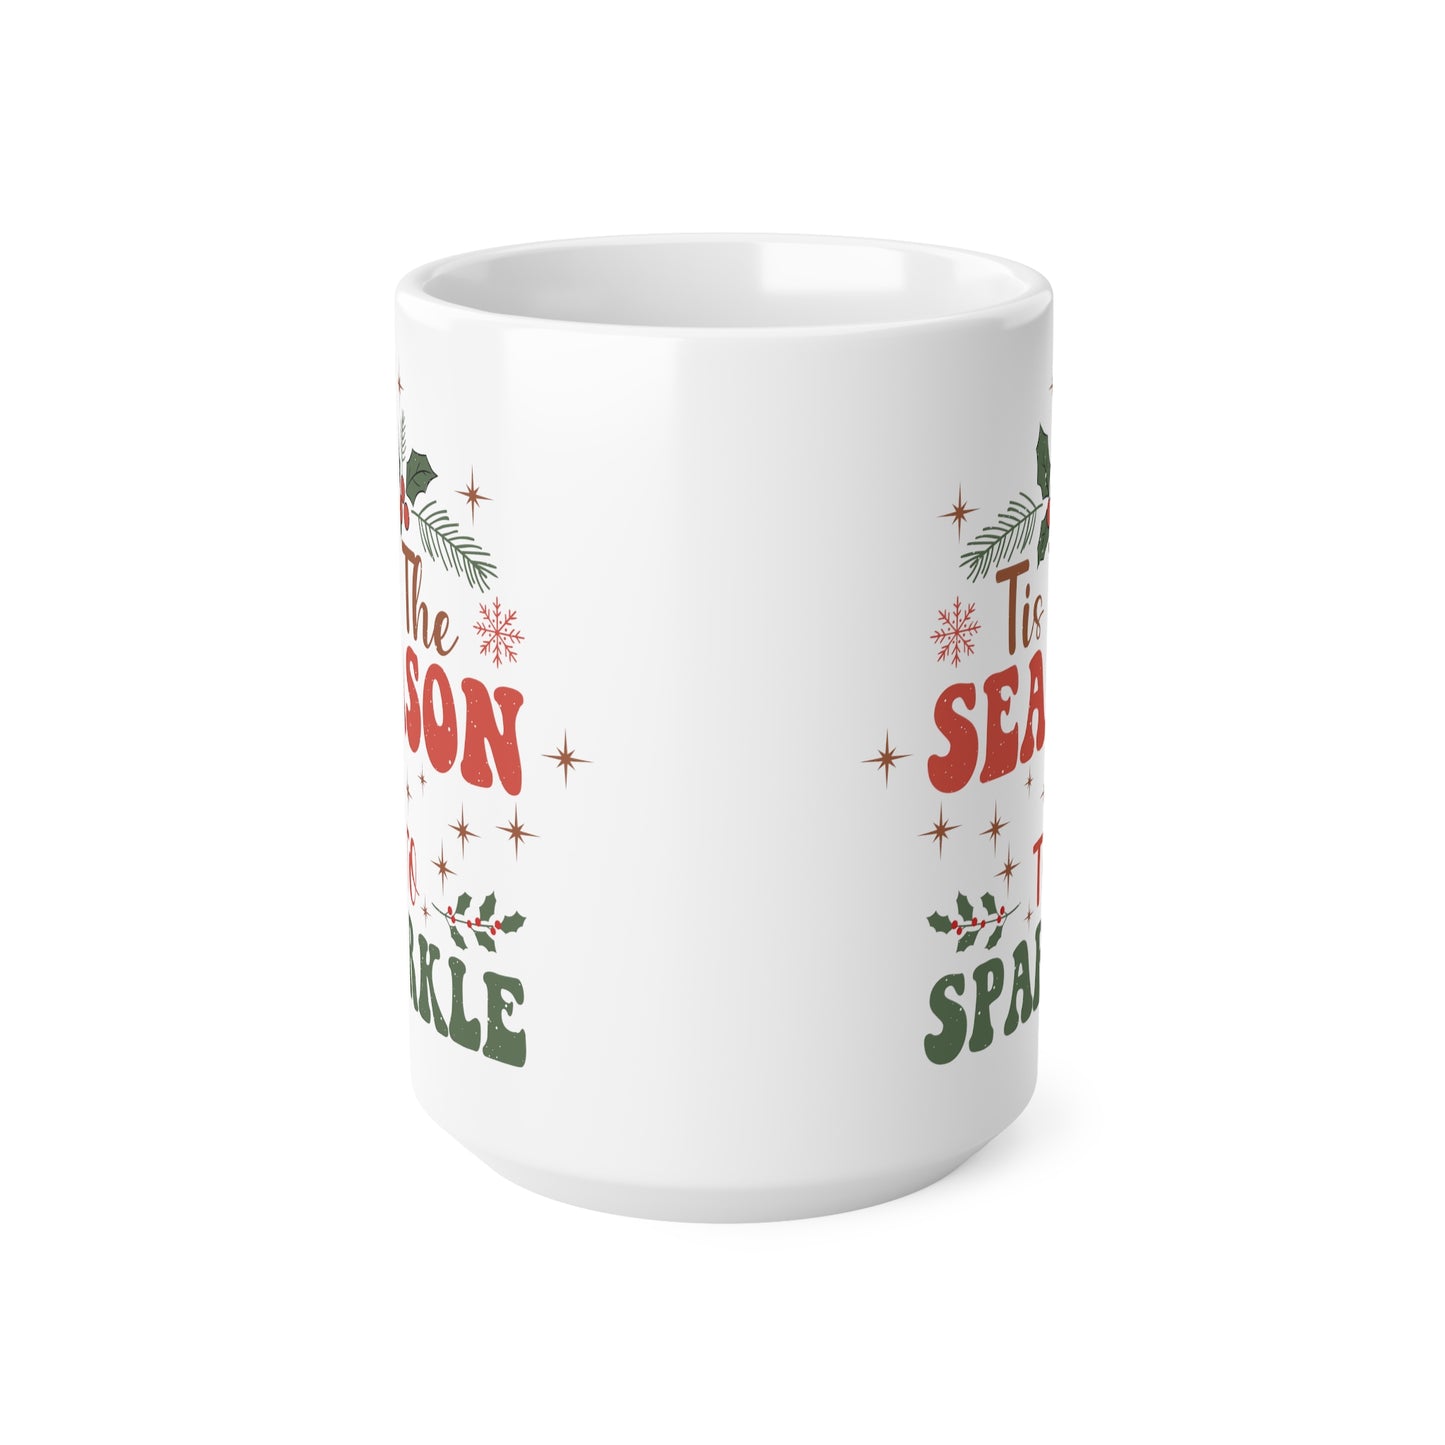 Tis The Season To Sparkle - Christmas Mug